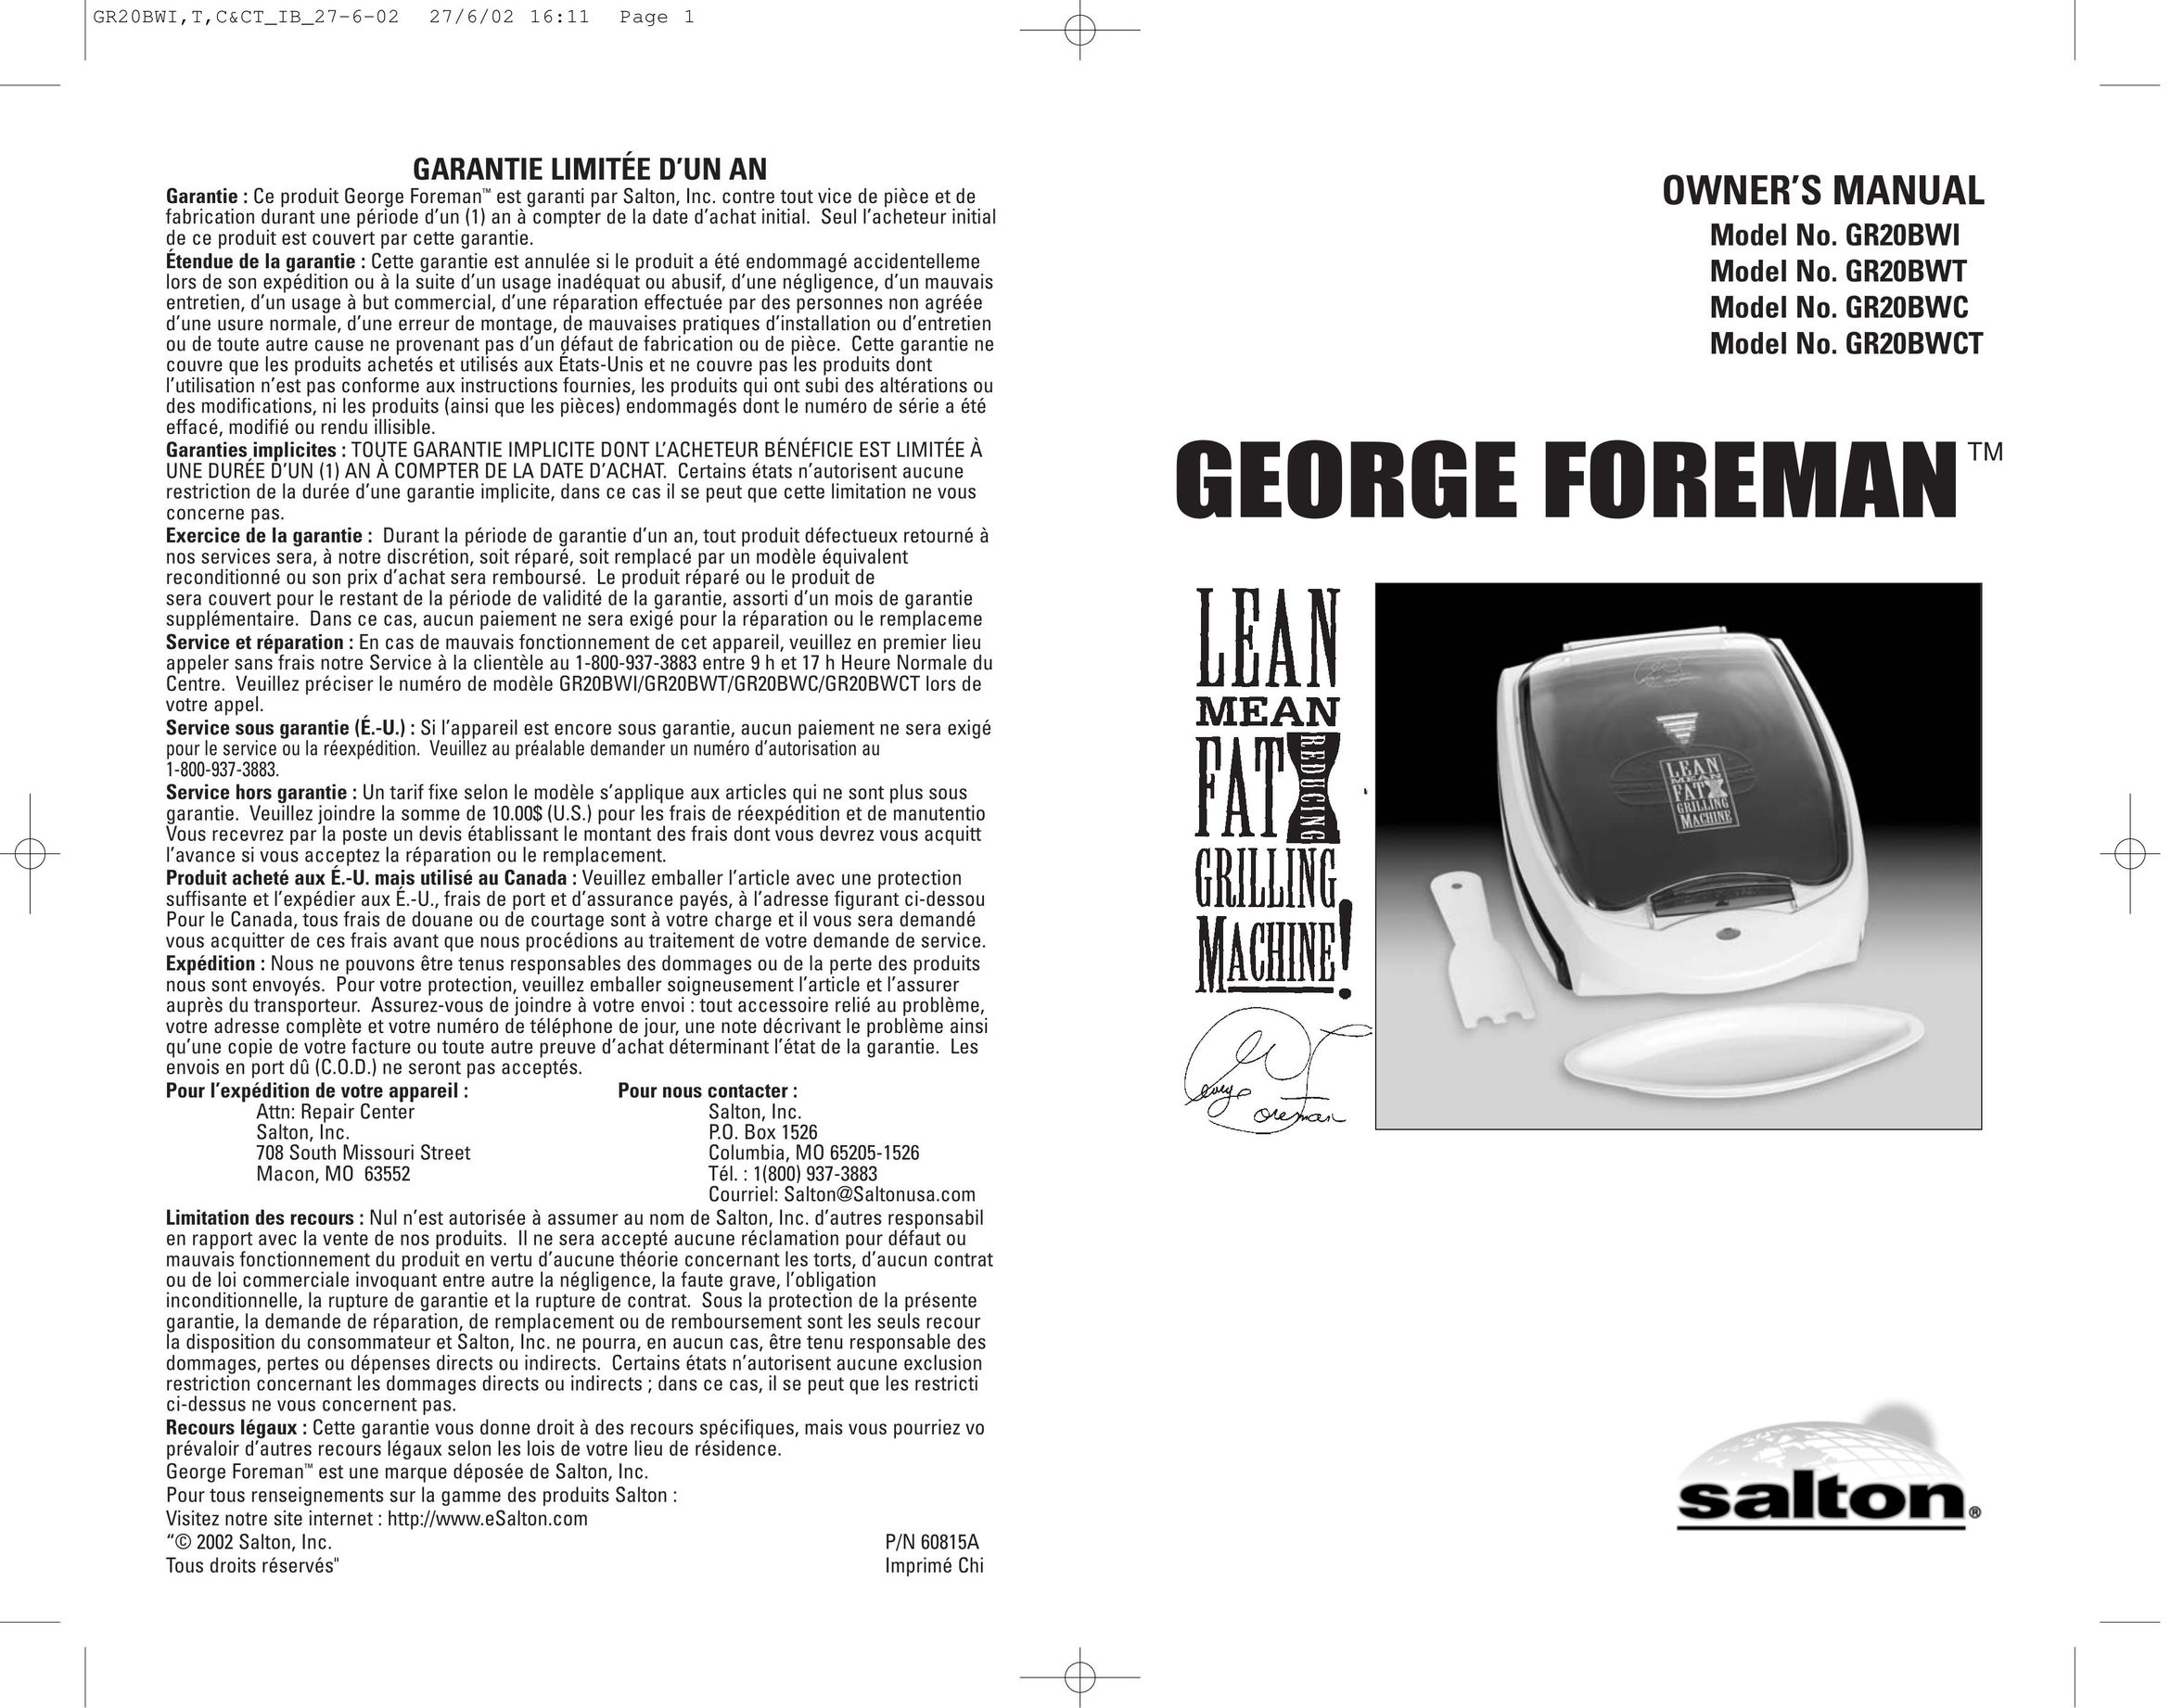 George Foreman GR20BWT Kitchen Grill User Manual